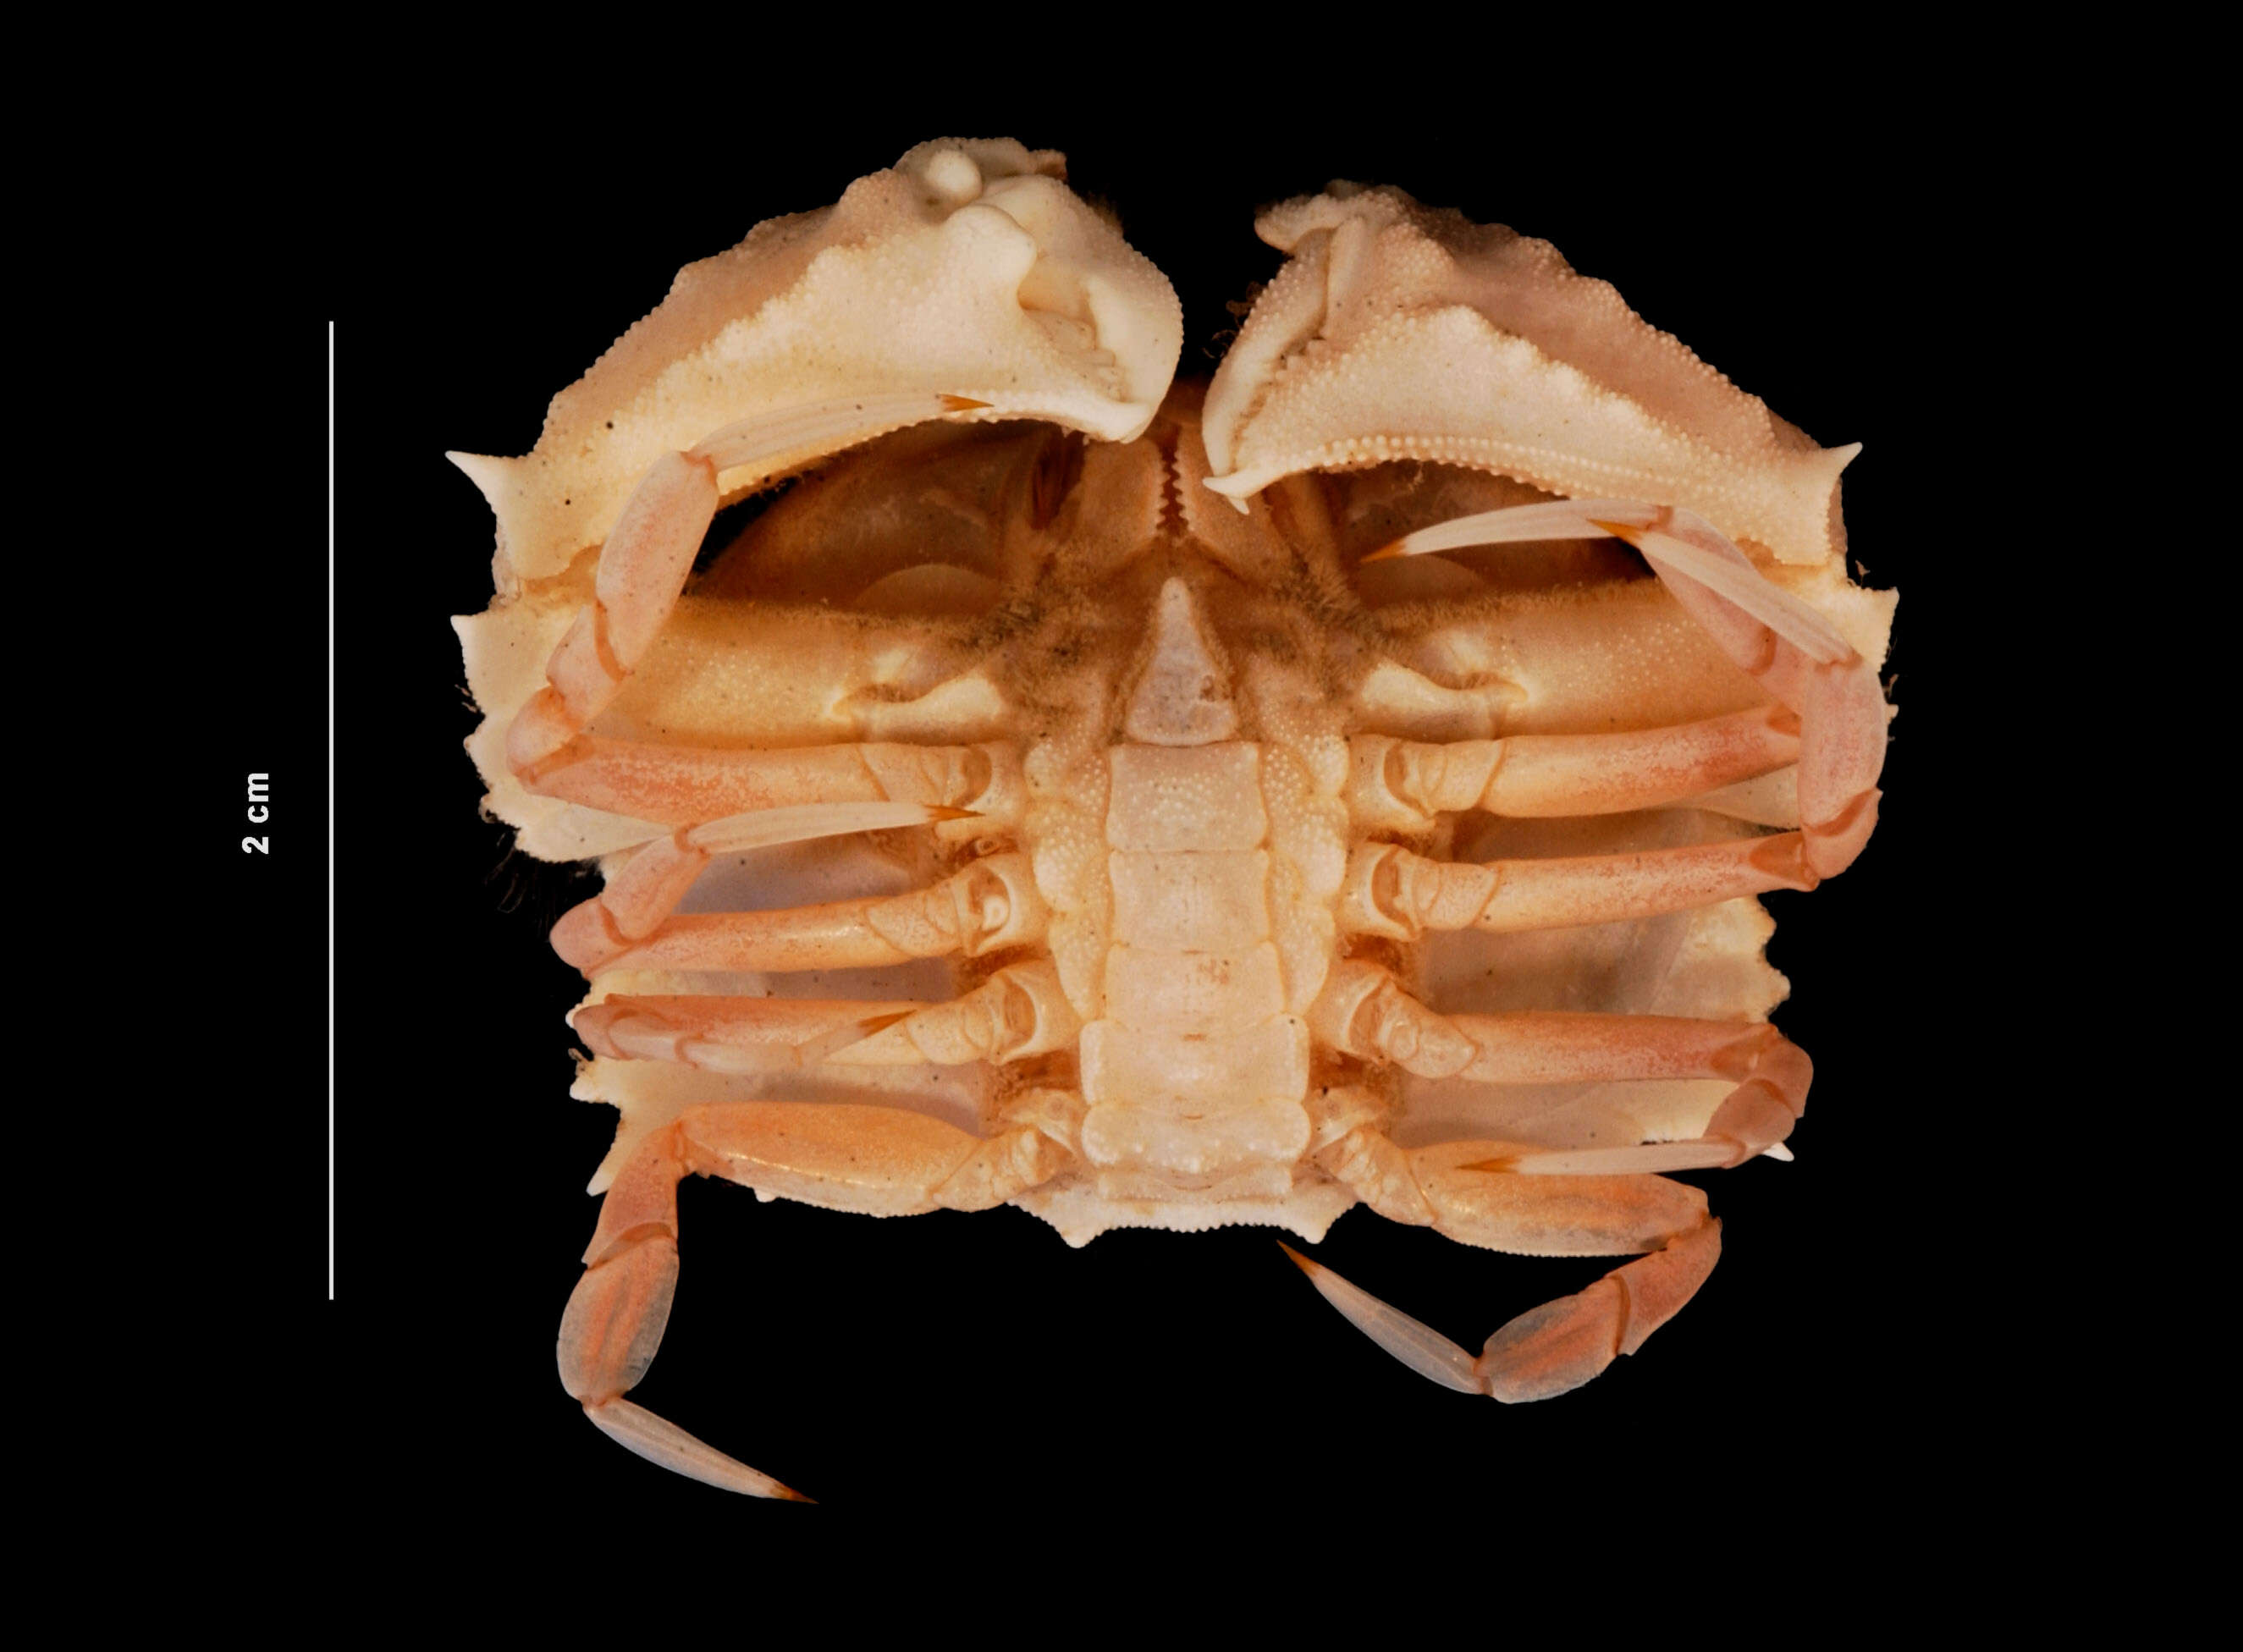 Image of yellow box crab